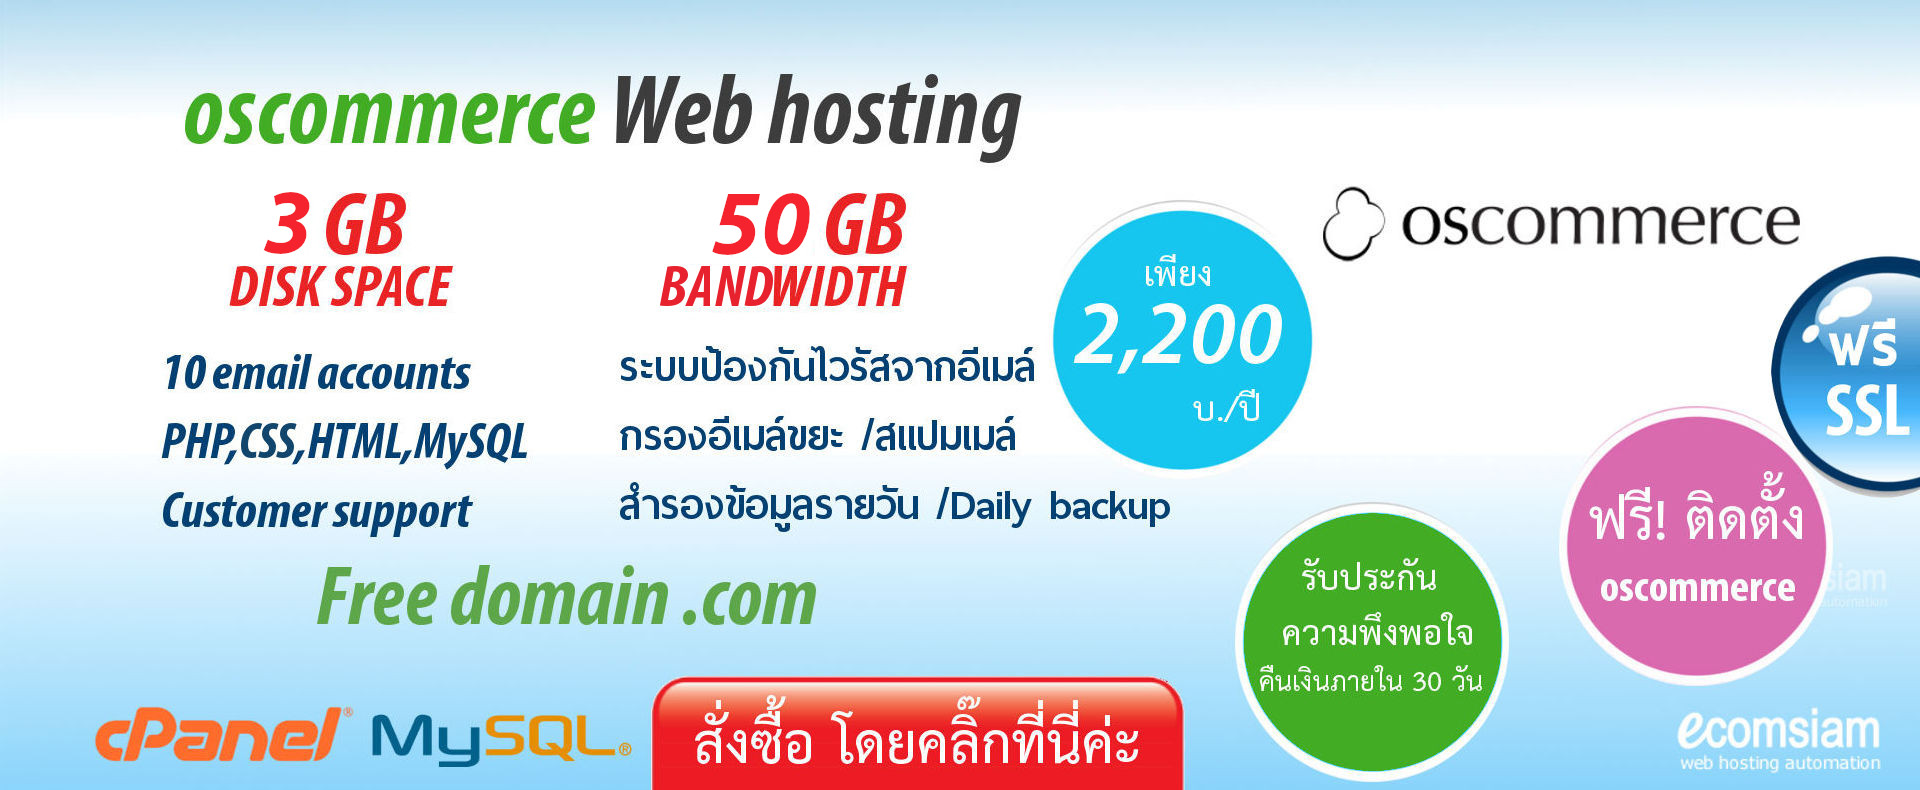 web hosting thailand -oscommerce shopping cart  ฟรีโดเมน ฟรี SSL เว็บโฮสติ้งไทย ราคาเบาๆ เริ่มต้นเพียง 2200 บาทต่อปี